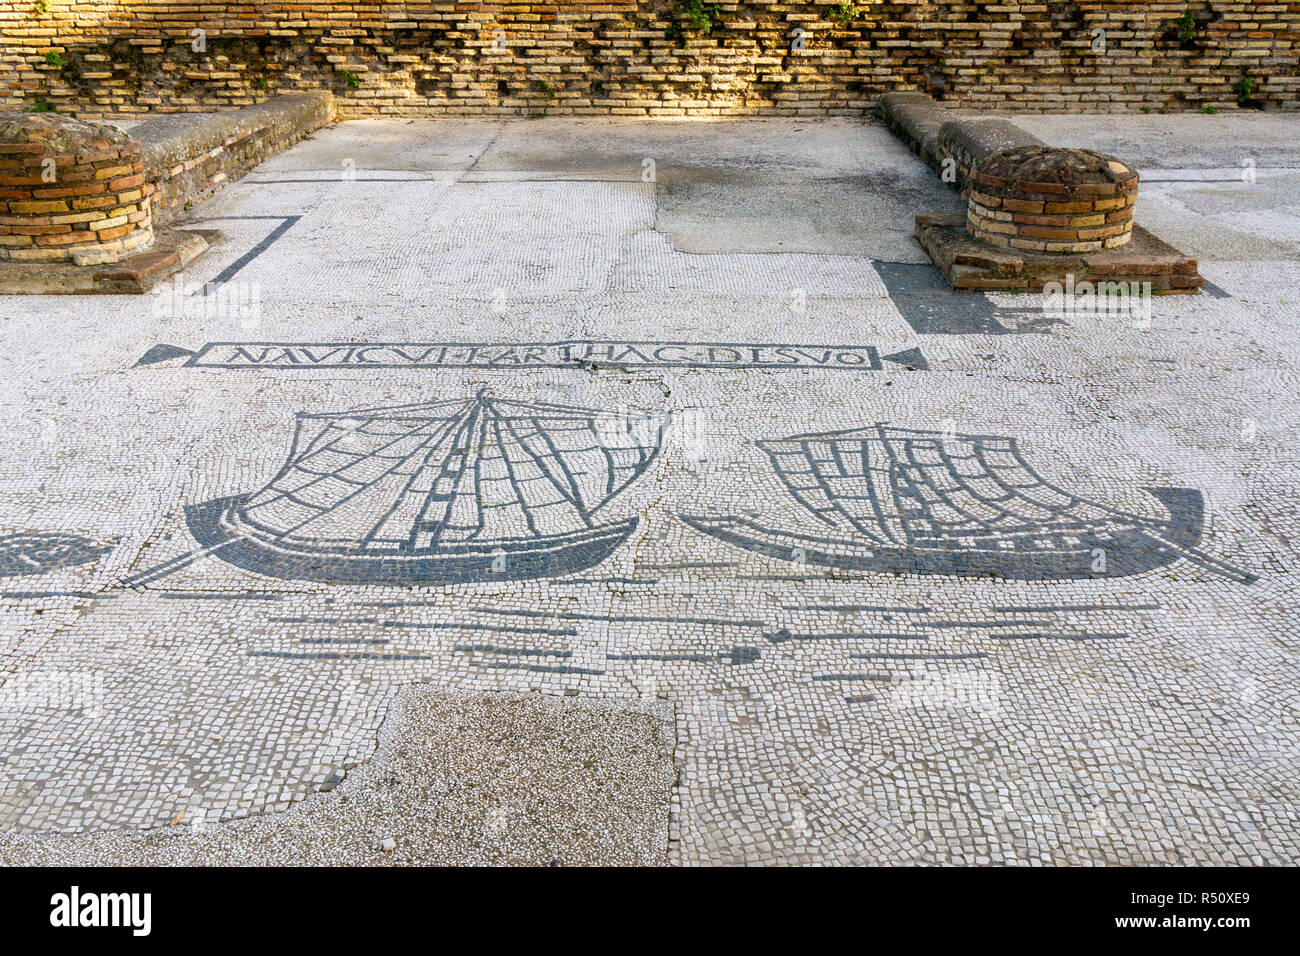 Ostia antica in Rome, Italy. Mosaic on the Shop Floor in Piazzale delle Corporazioni Stock Photo